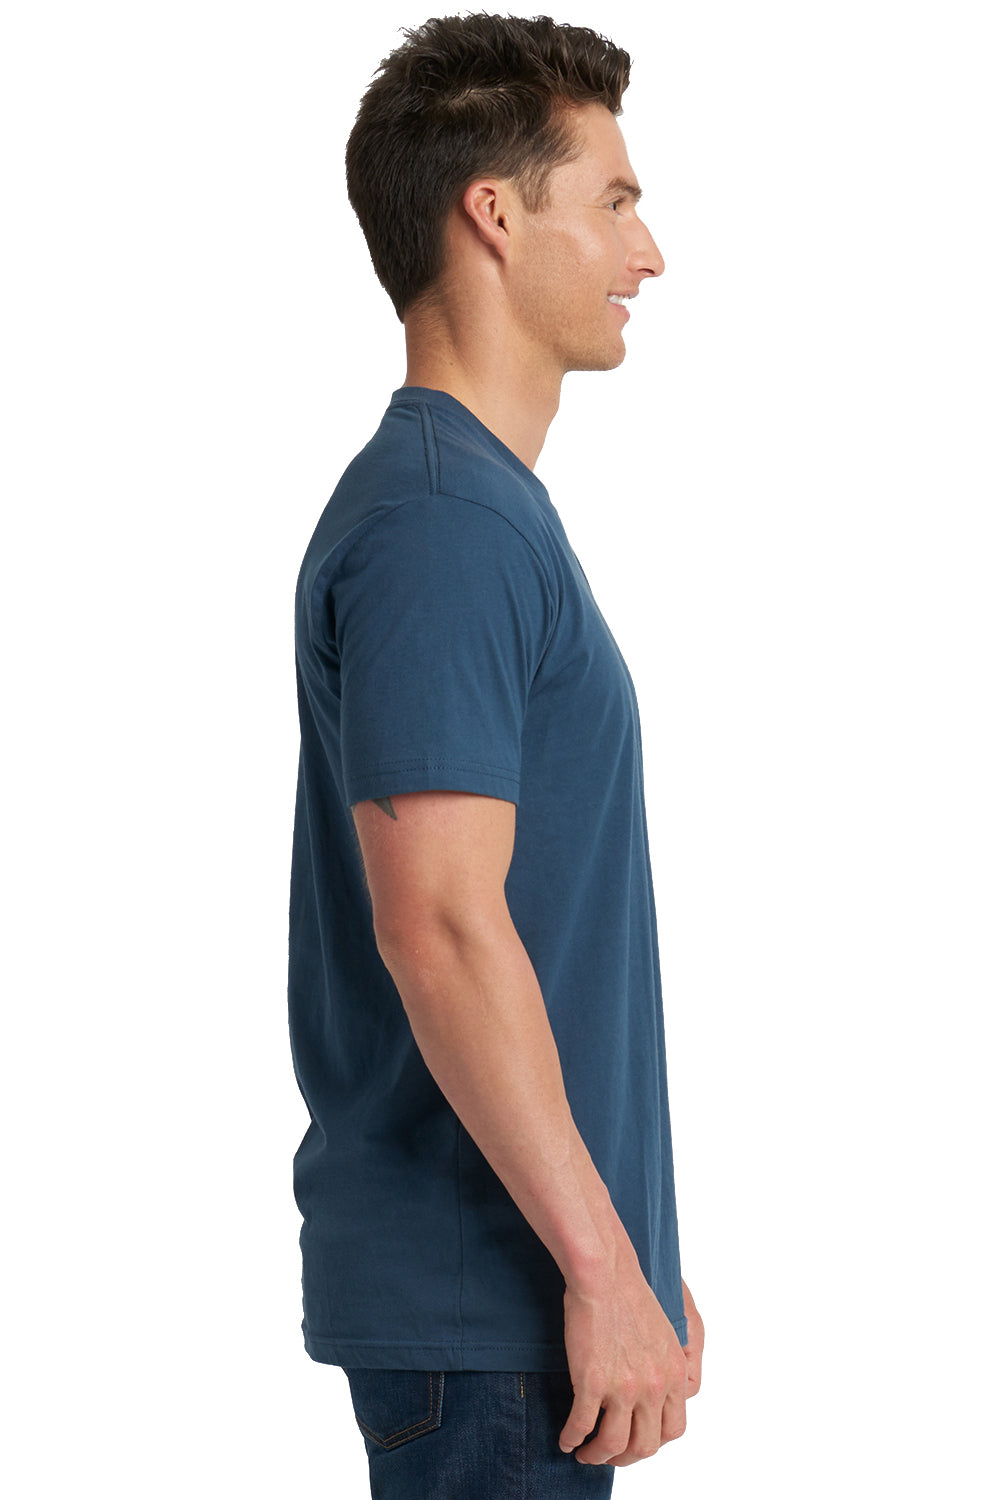 Next Level 3600 Mens Fine Jersey Short Sleeve Crewneck T-Shirt Indigo Blue Side